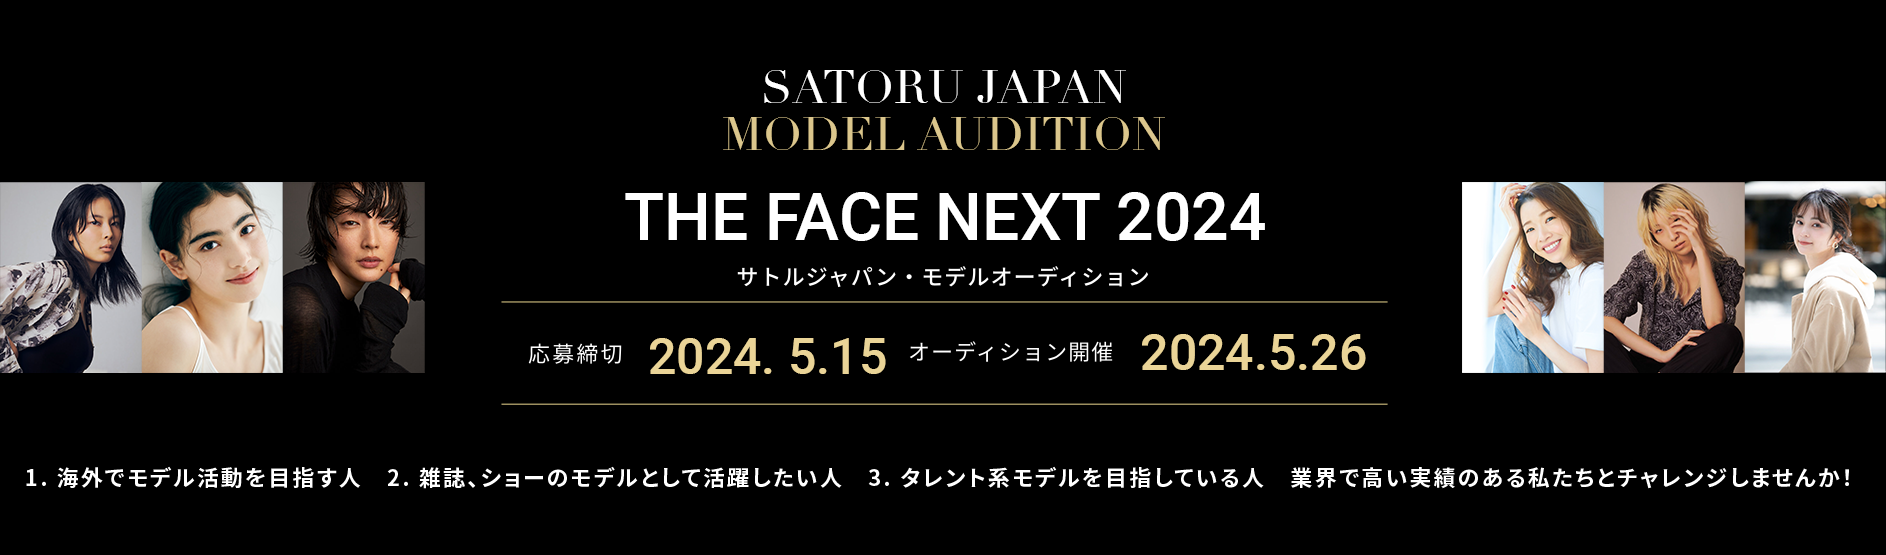 THE FACE NEXT SATORU JAPAN MODEL AUDITION 新人モデル・タレントオーディション開催